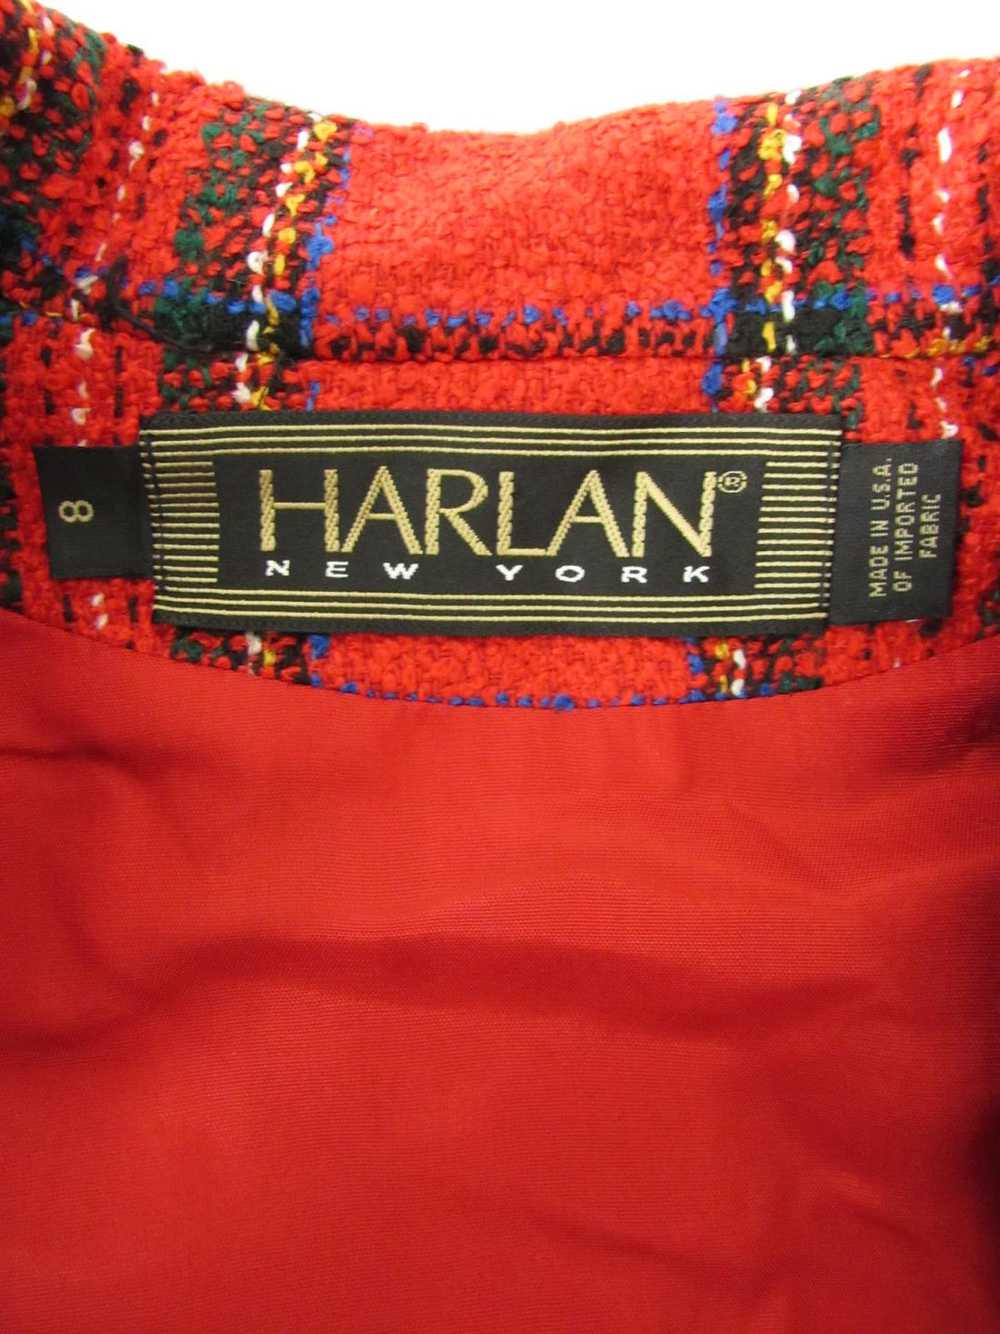 Harlan New York Blazer Jacket - image 3